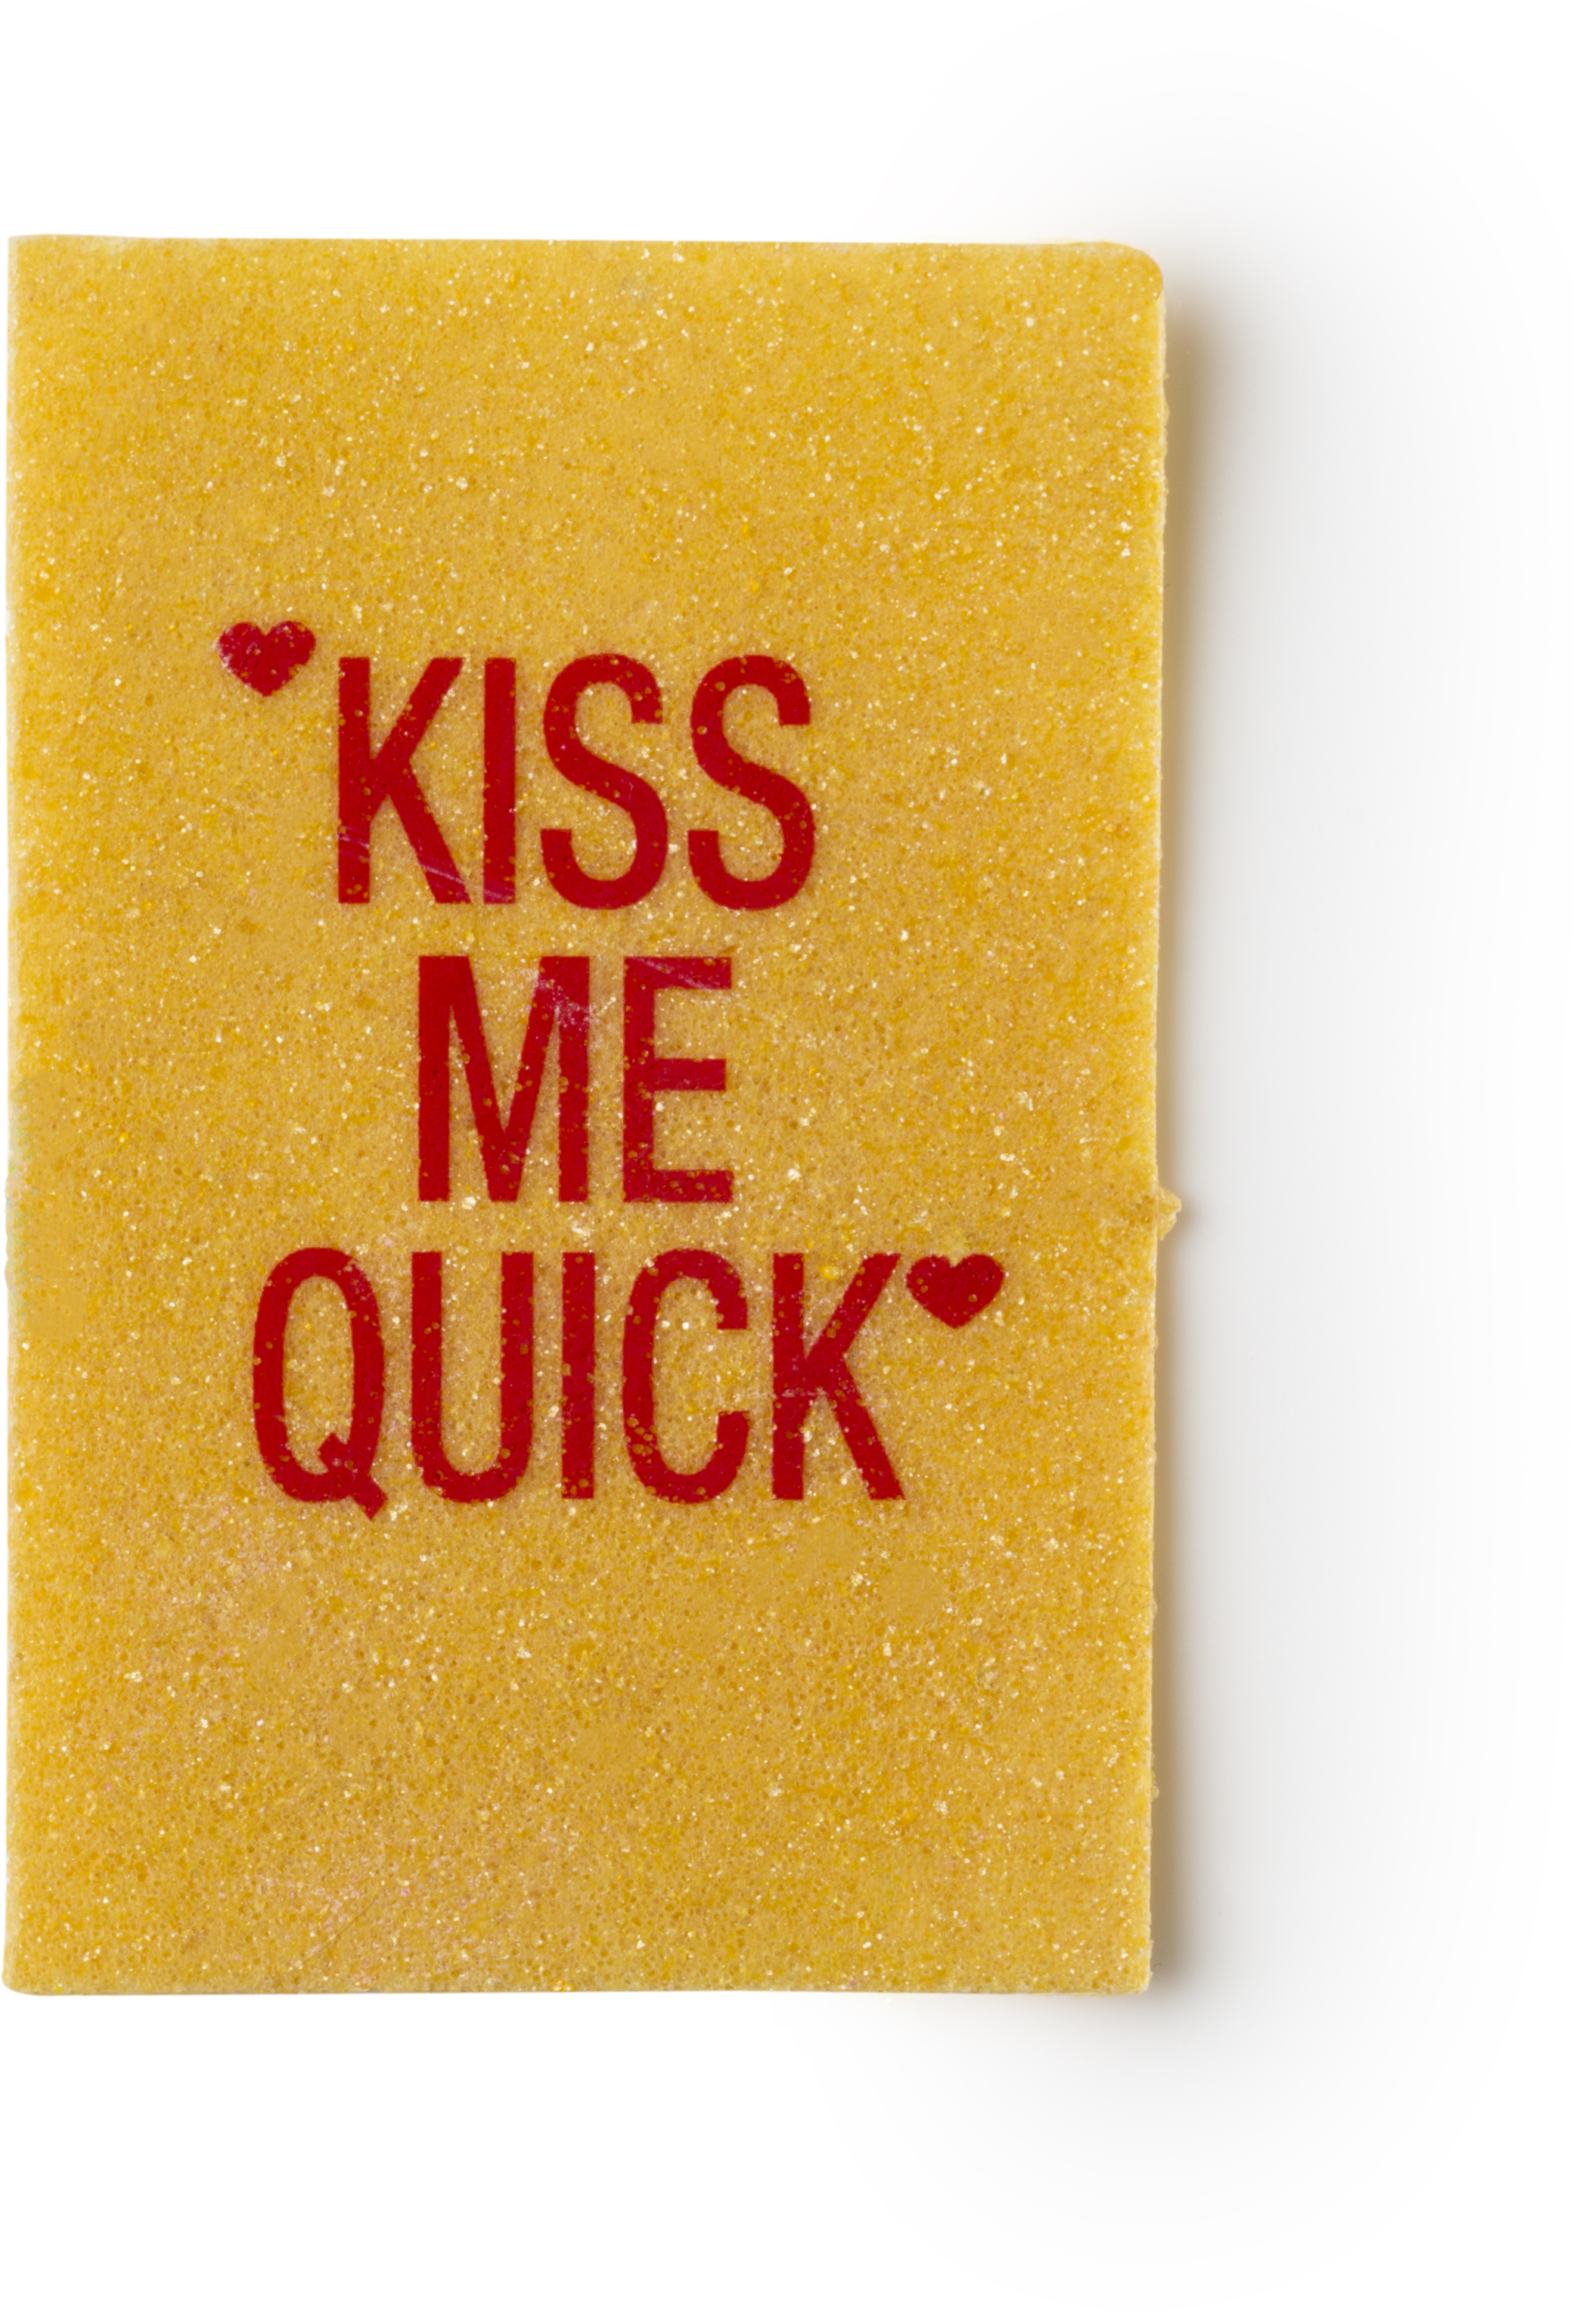 kiss_me_quick_soap_valentines